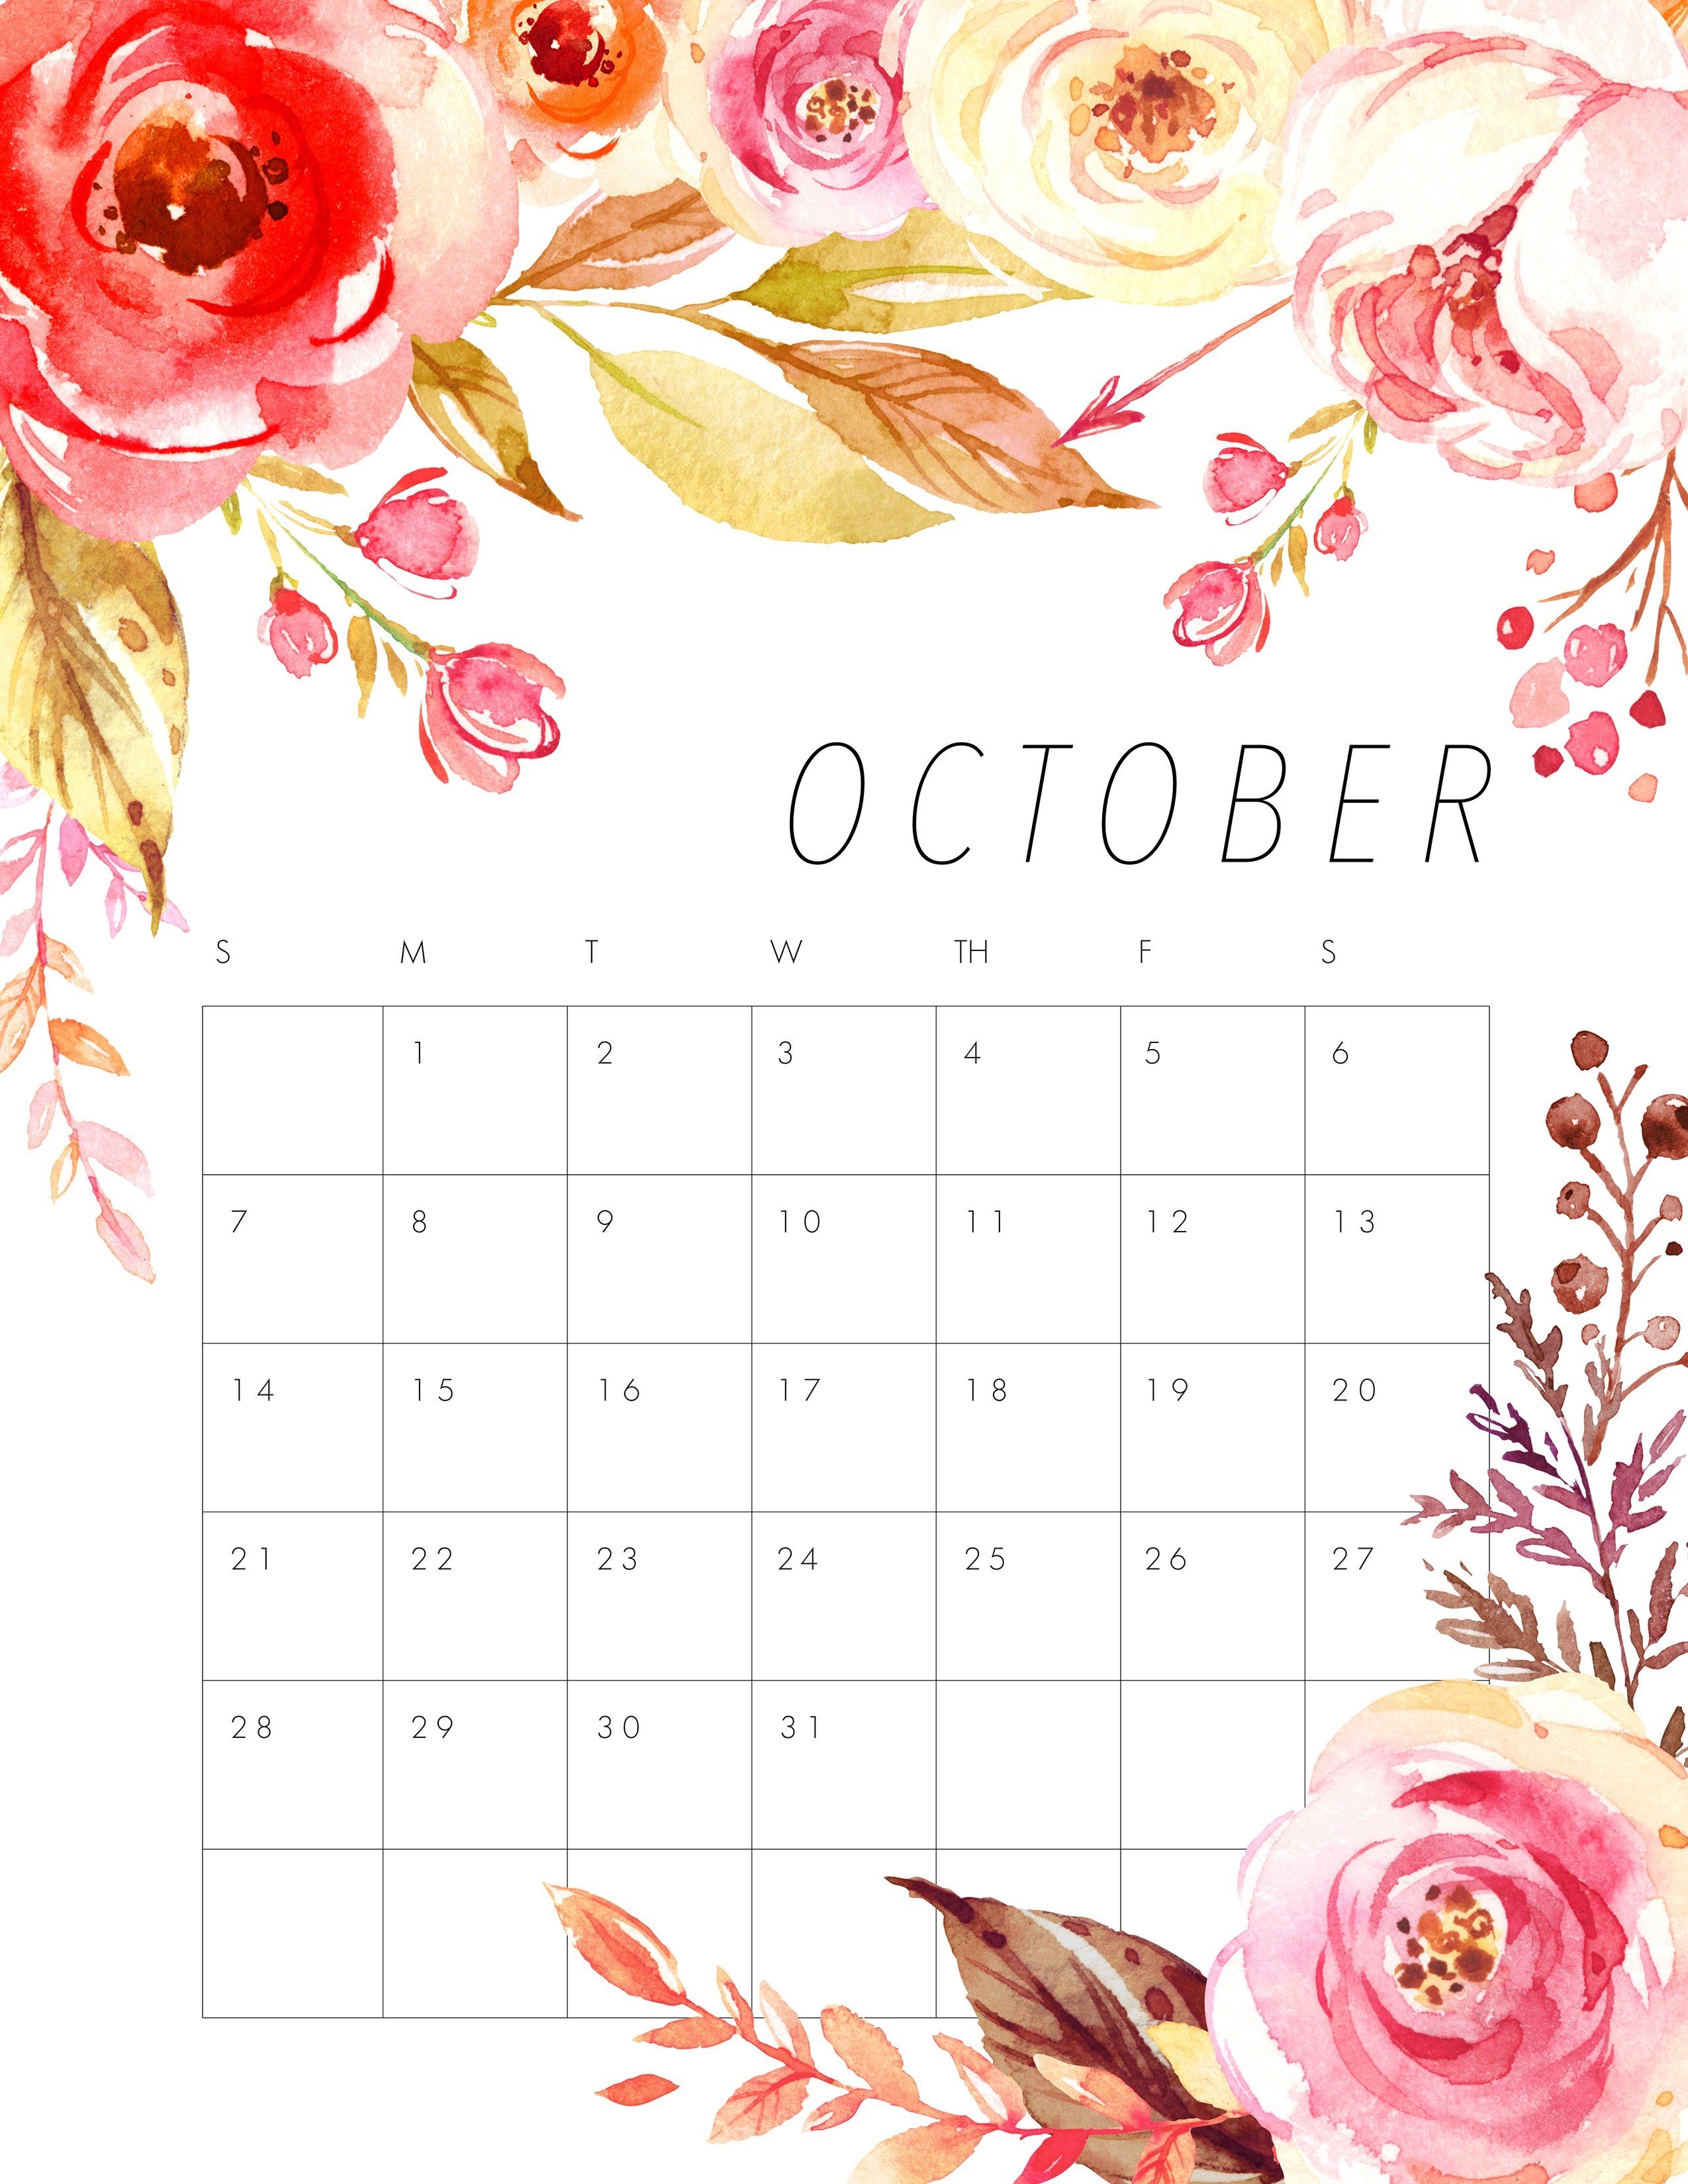 October 2018 Floral Calendar